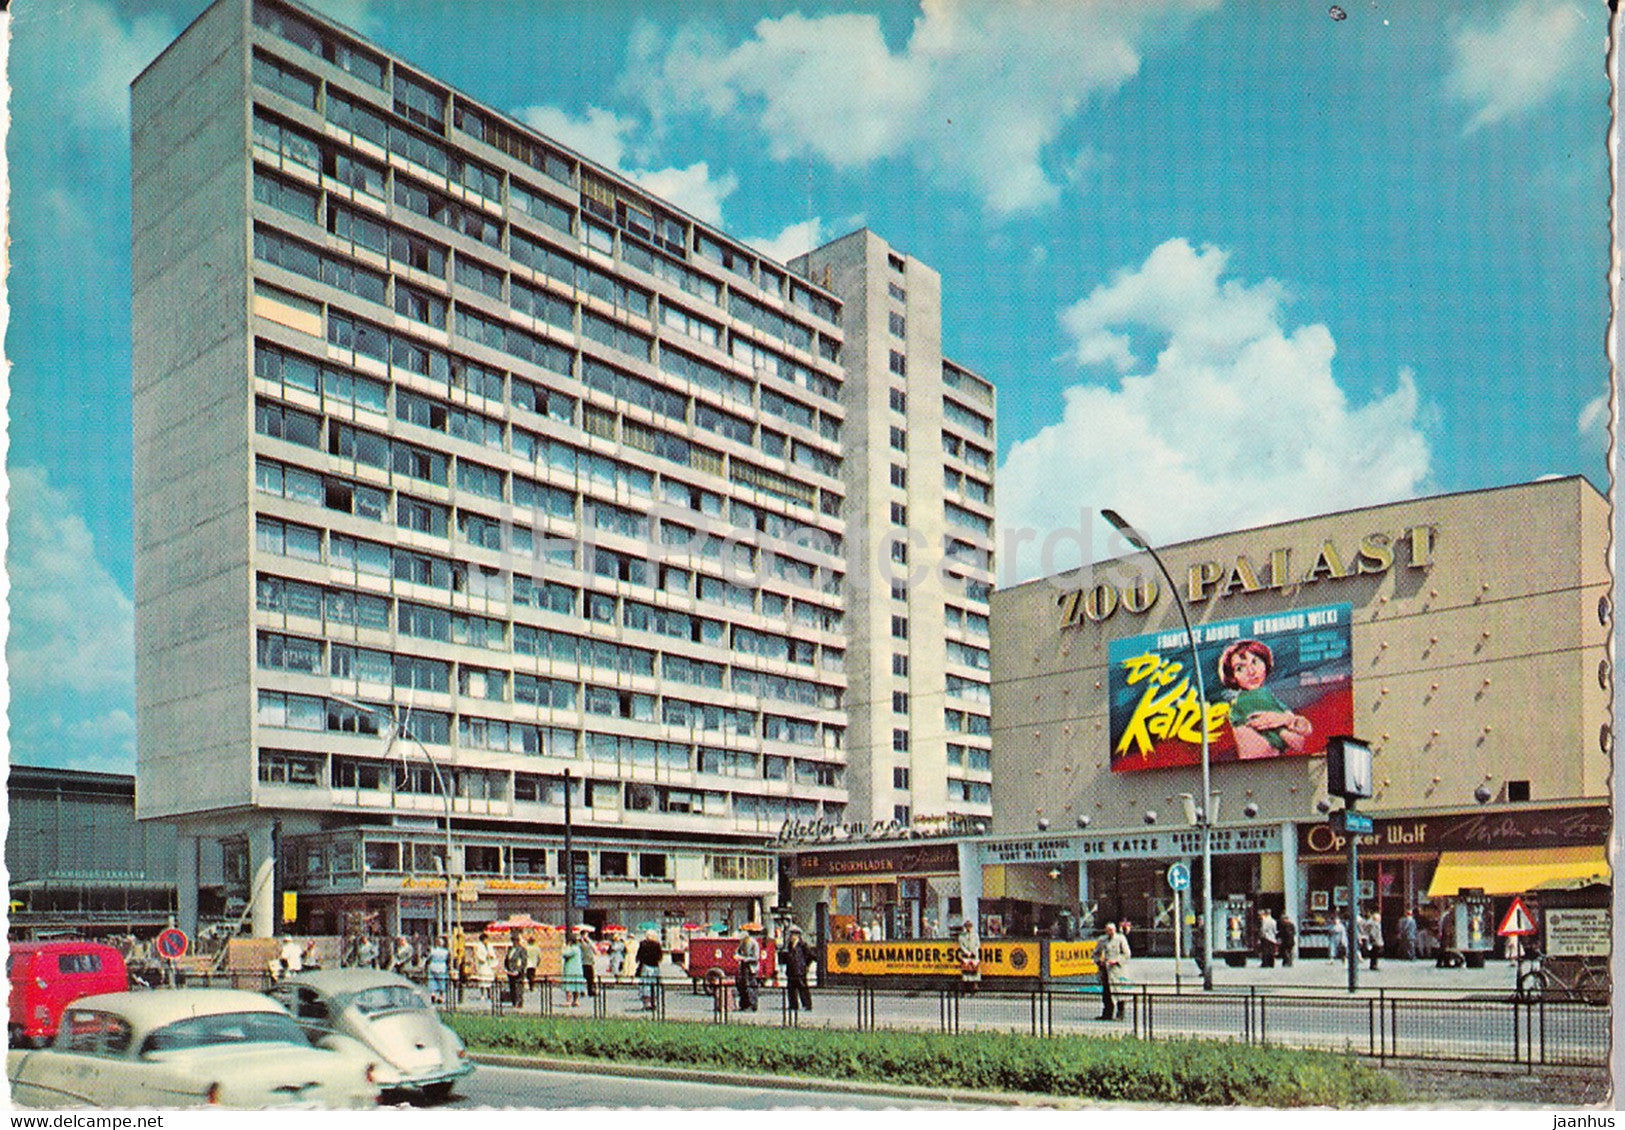 Berlin - Hochhaus - Zoo Palast - car - 1964 - Germany - used - JH Postcards